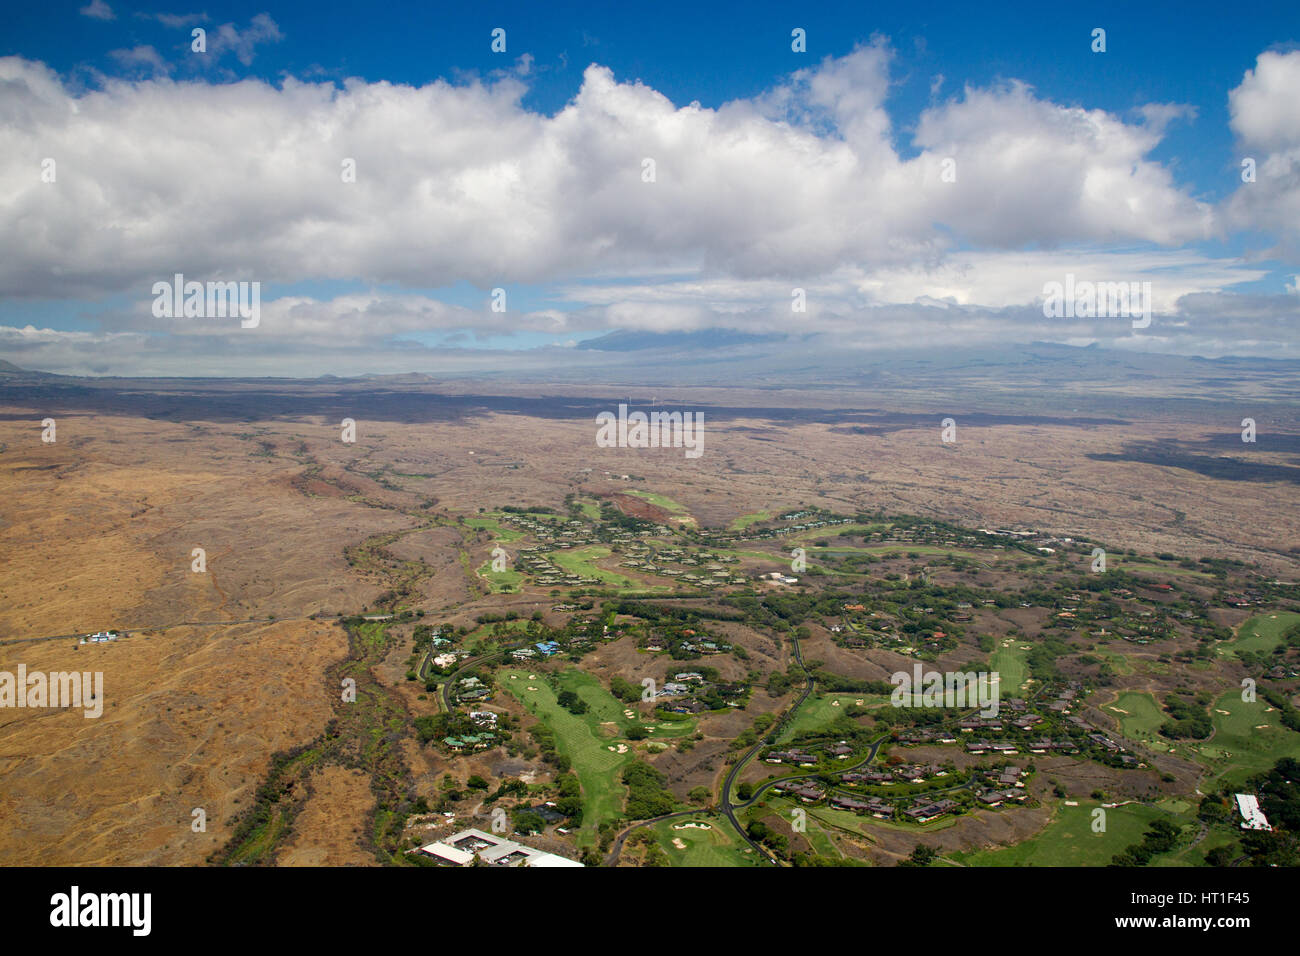 Aerial view of Mauna Kea Beach on the west coast of Big Island, Hawaii, USA, with a view towards the summit of Mauna Kea, hidden behind clouds. Stock Photo